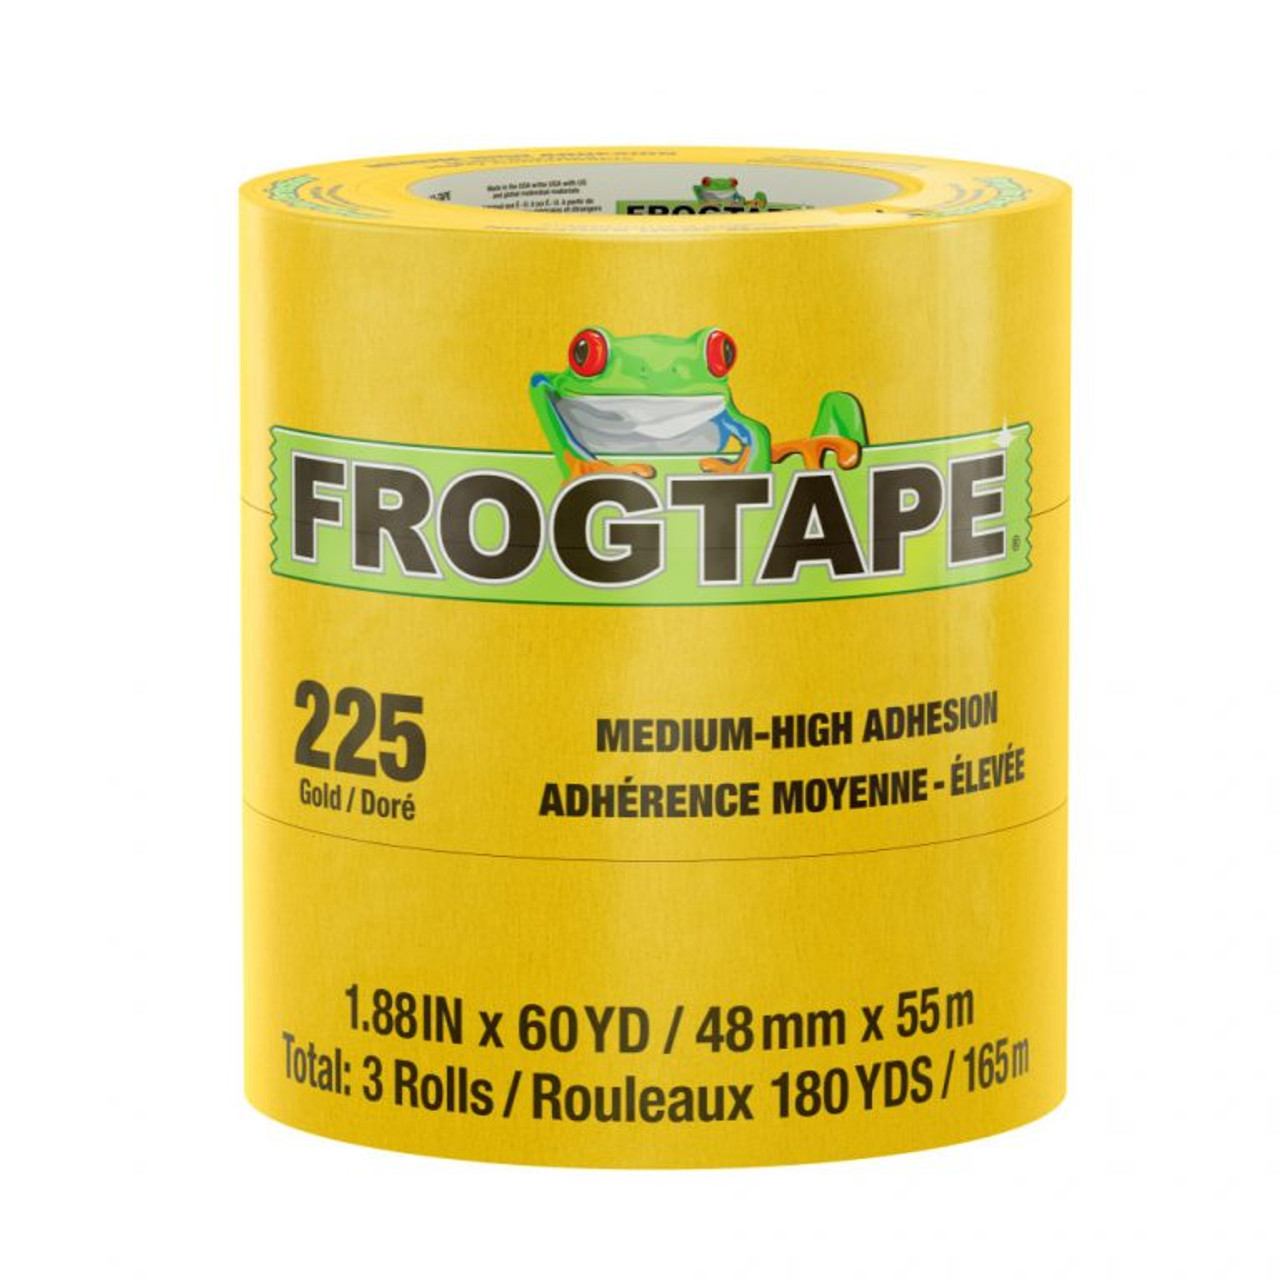 FrogTape Multi-Purpose 1.88-in x 66 Yard(s) Painters Tape at